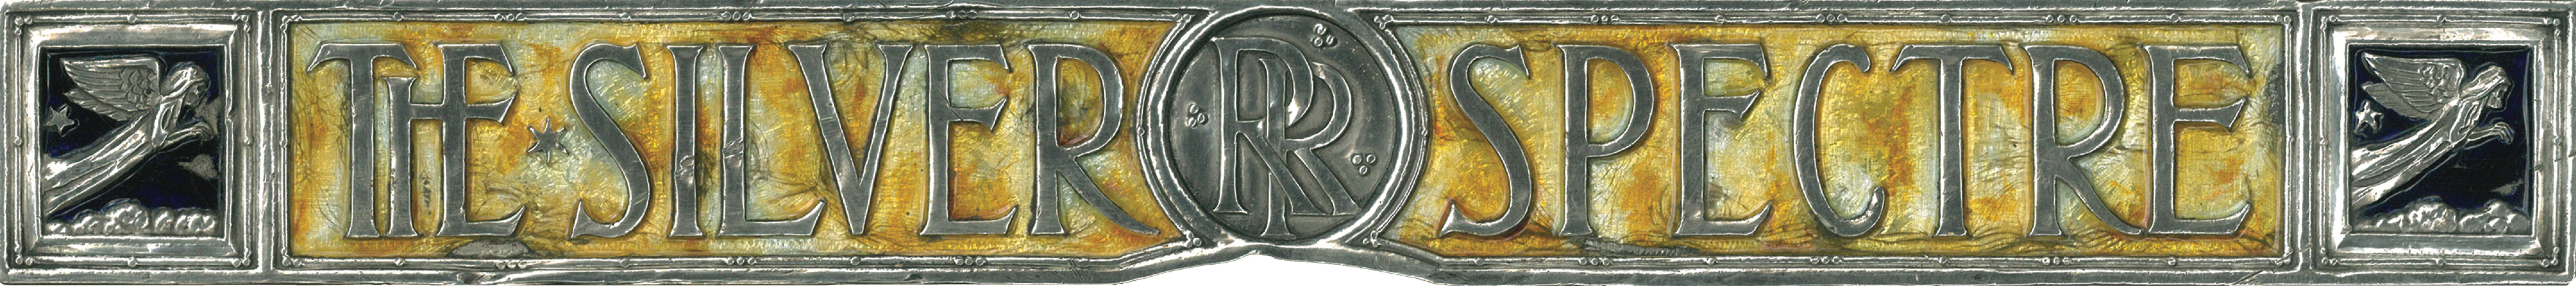 rolls-royce-the-silver-spectre-chassis-1601-1910-b-13502px Rolls Royce: historia del nombre Spectre